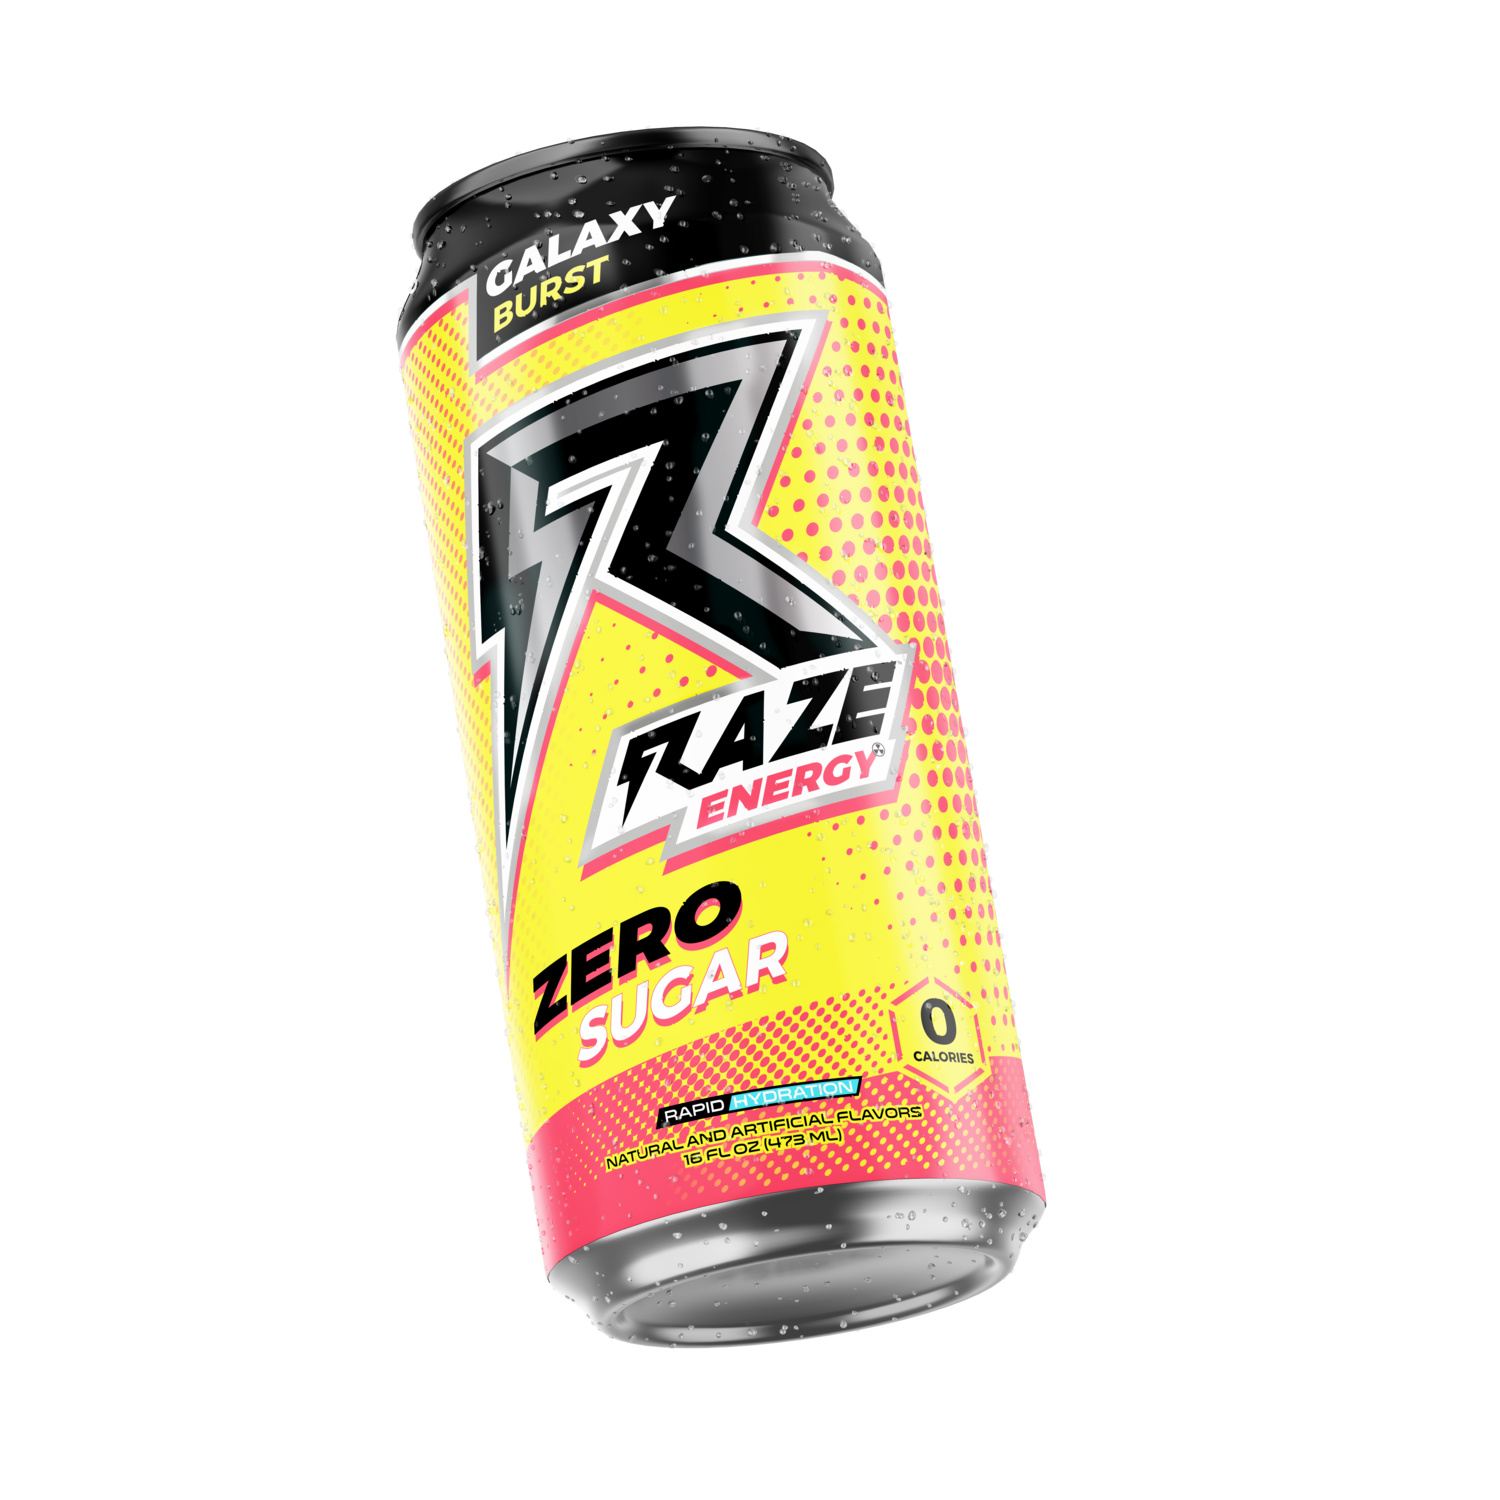 Raze Energy - Galaxy Burst 16oz. (One Can)